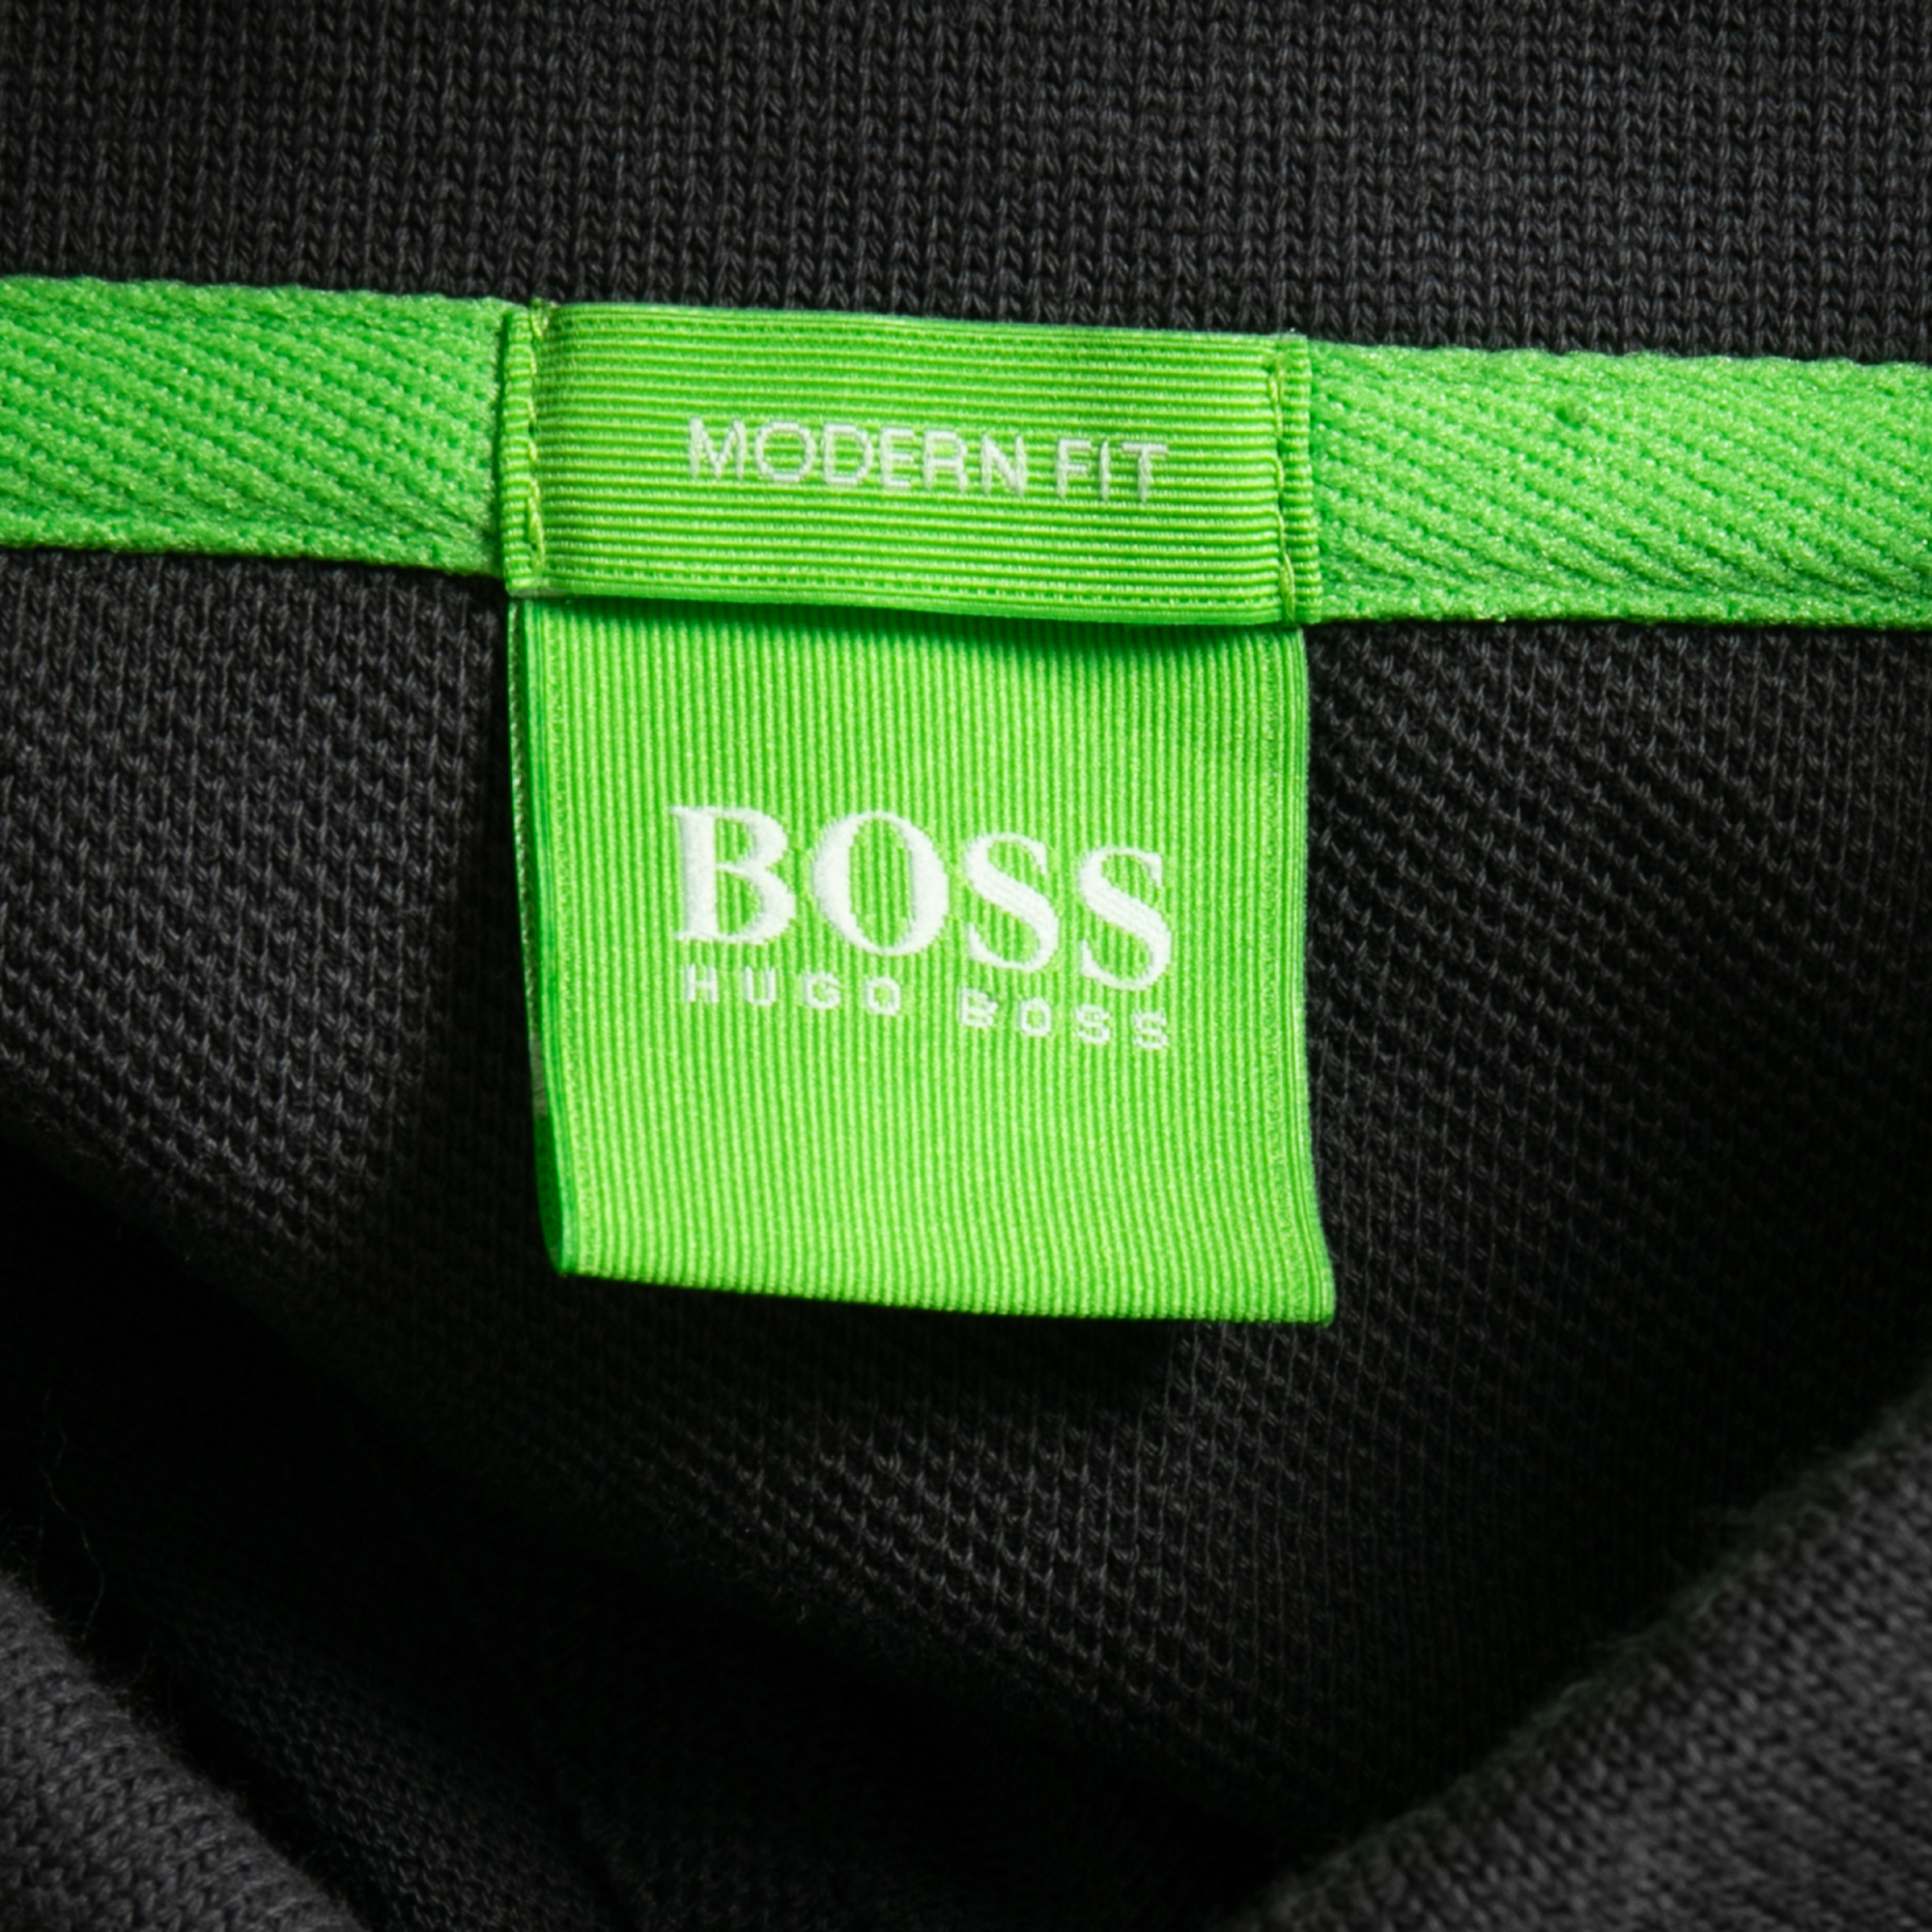 Boss By Hugo Boss Grey Logo Embroidered Cotton Pique Polo T-Shirt 3XL